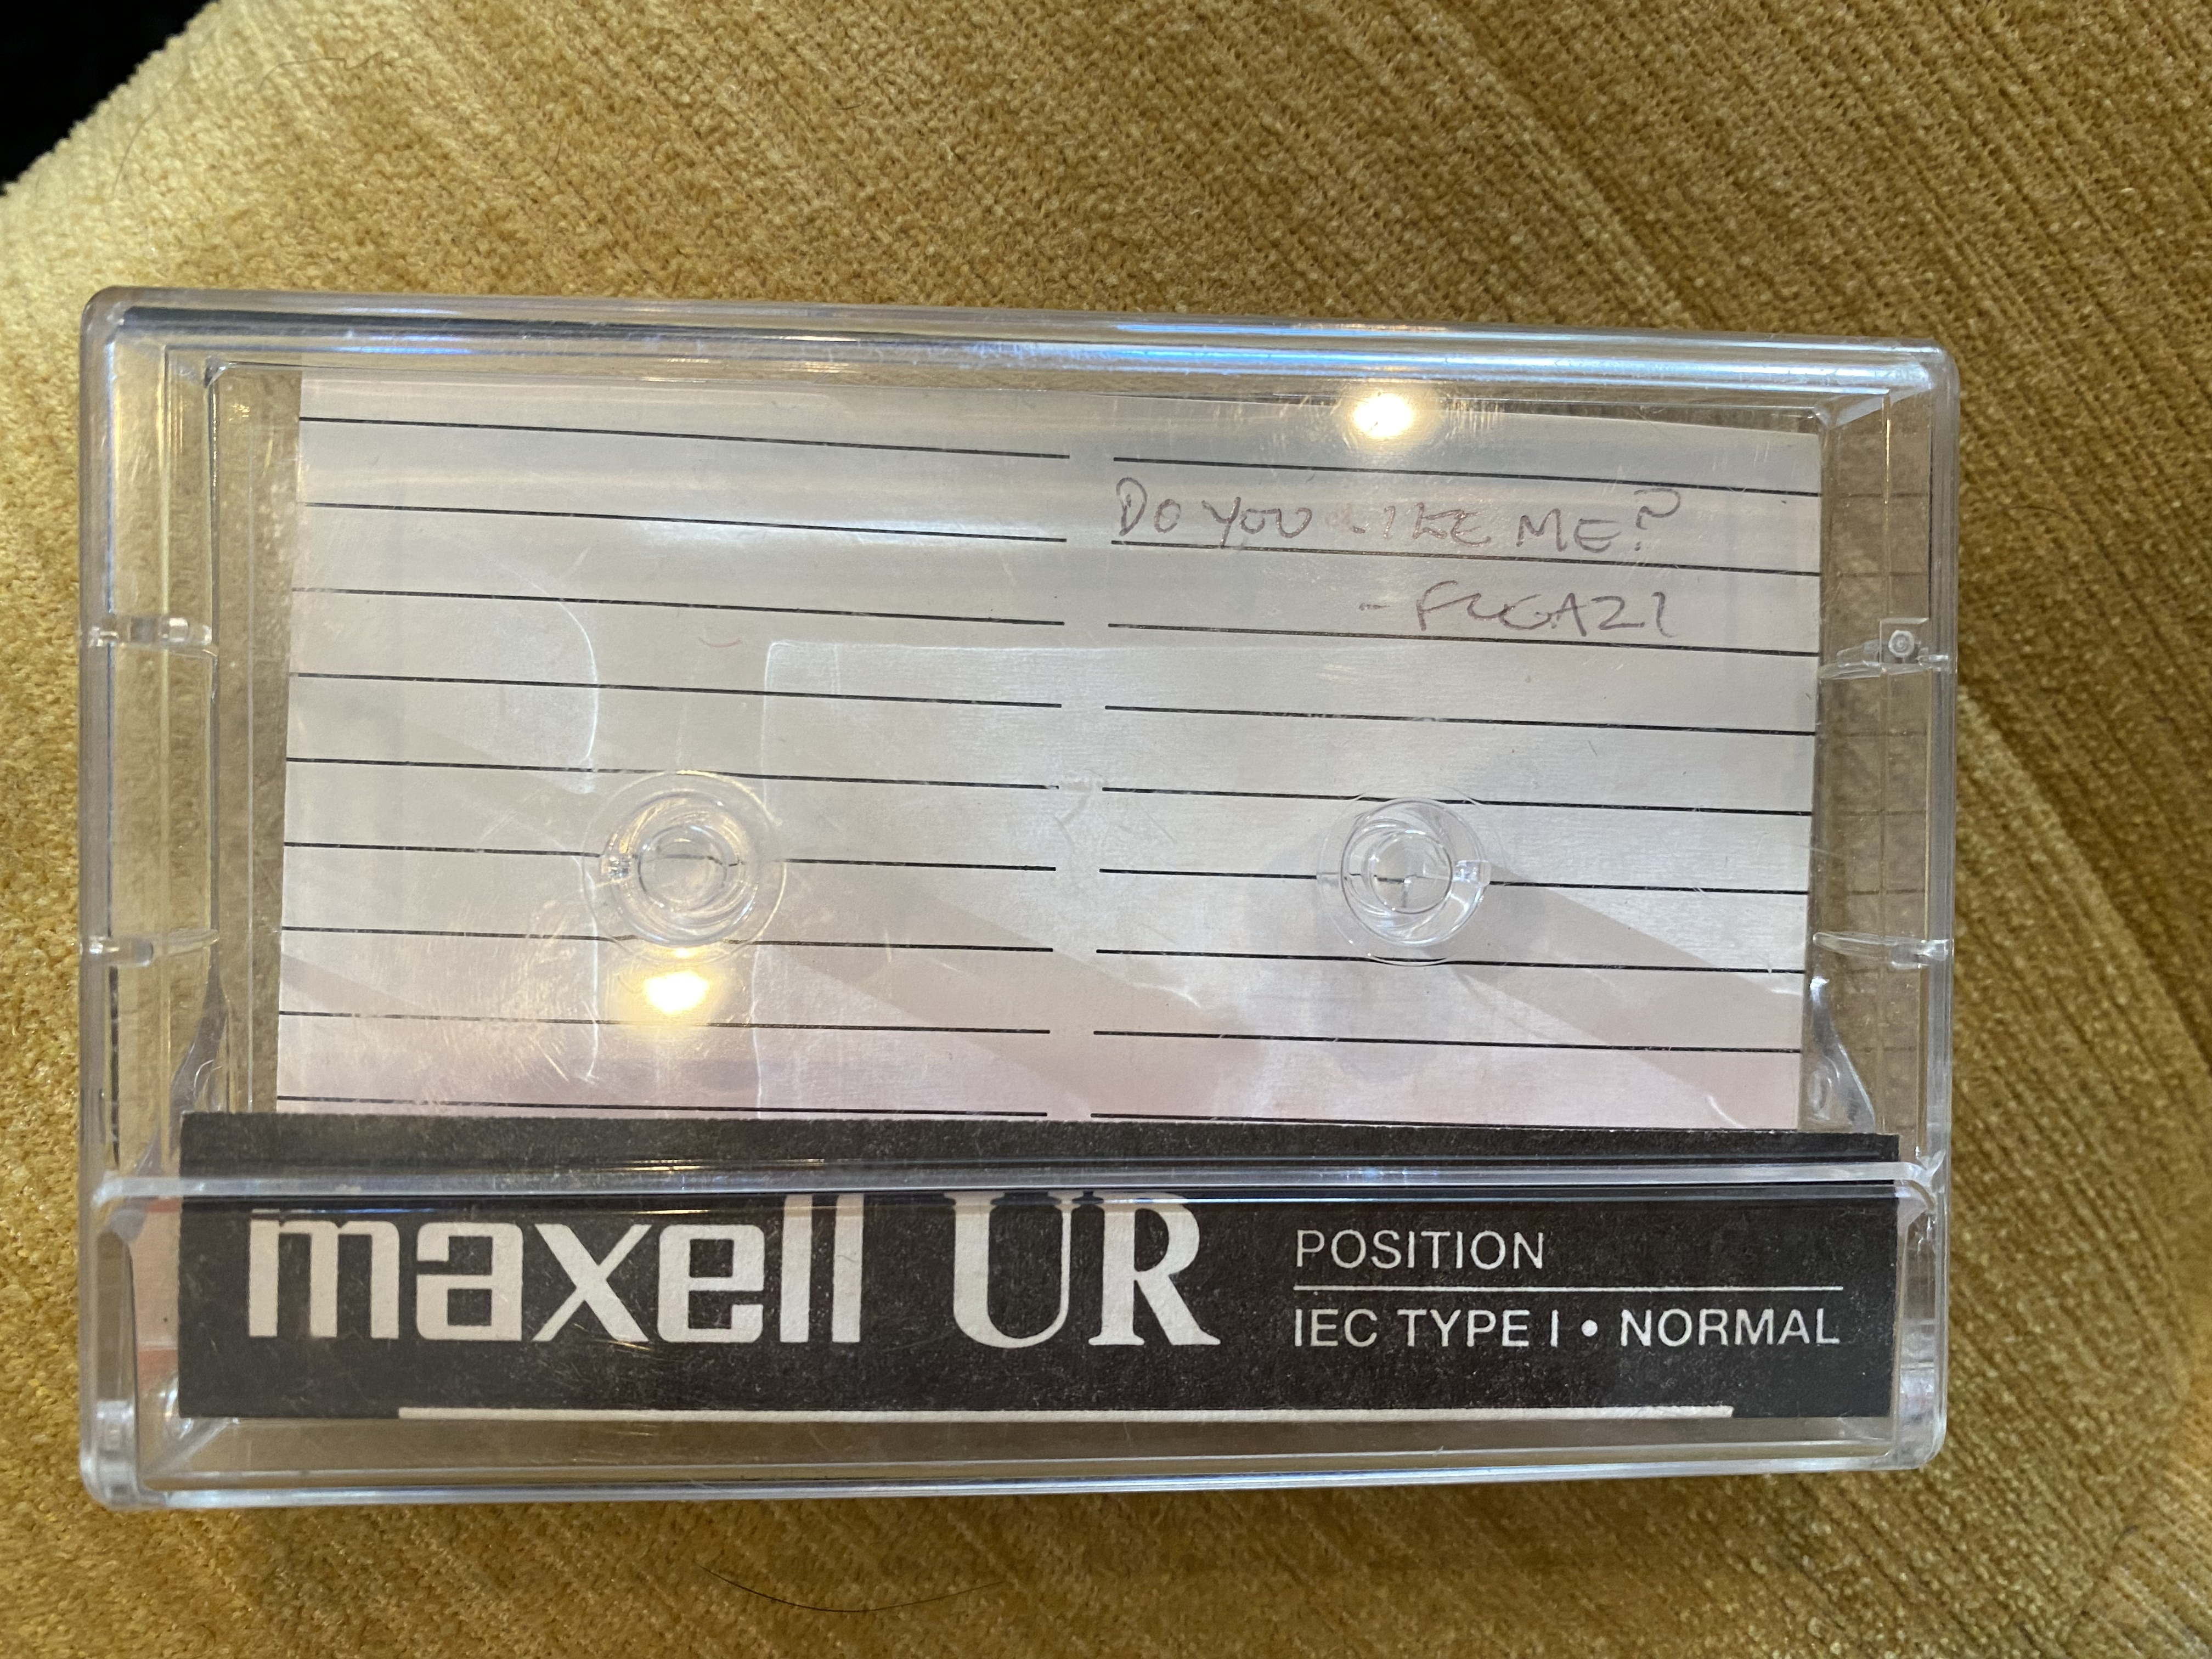 Inside of tape lists the song "Do You Like Me?" by Fugazi